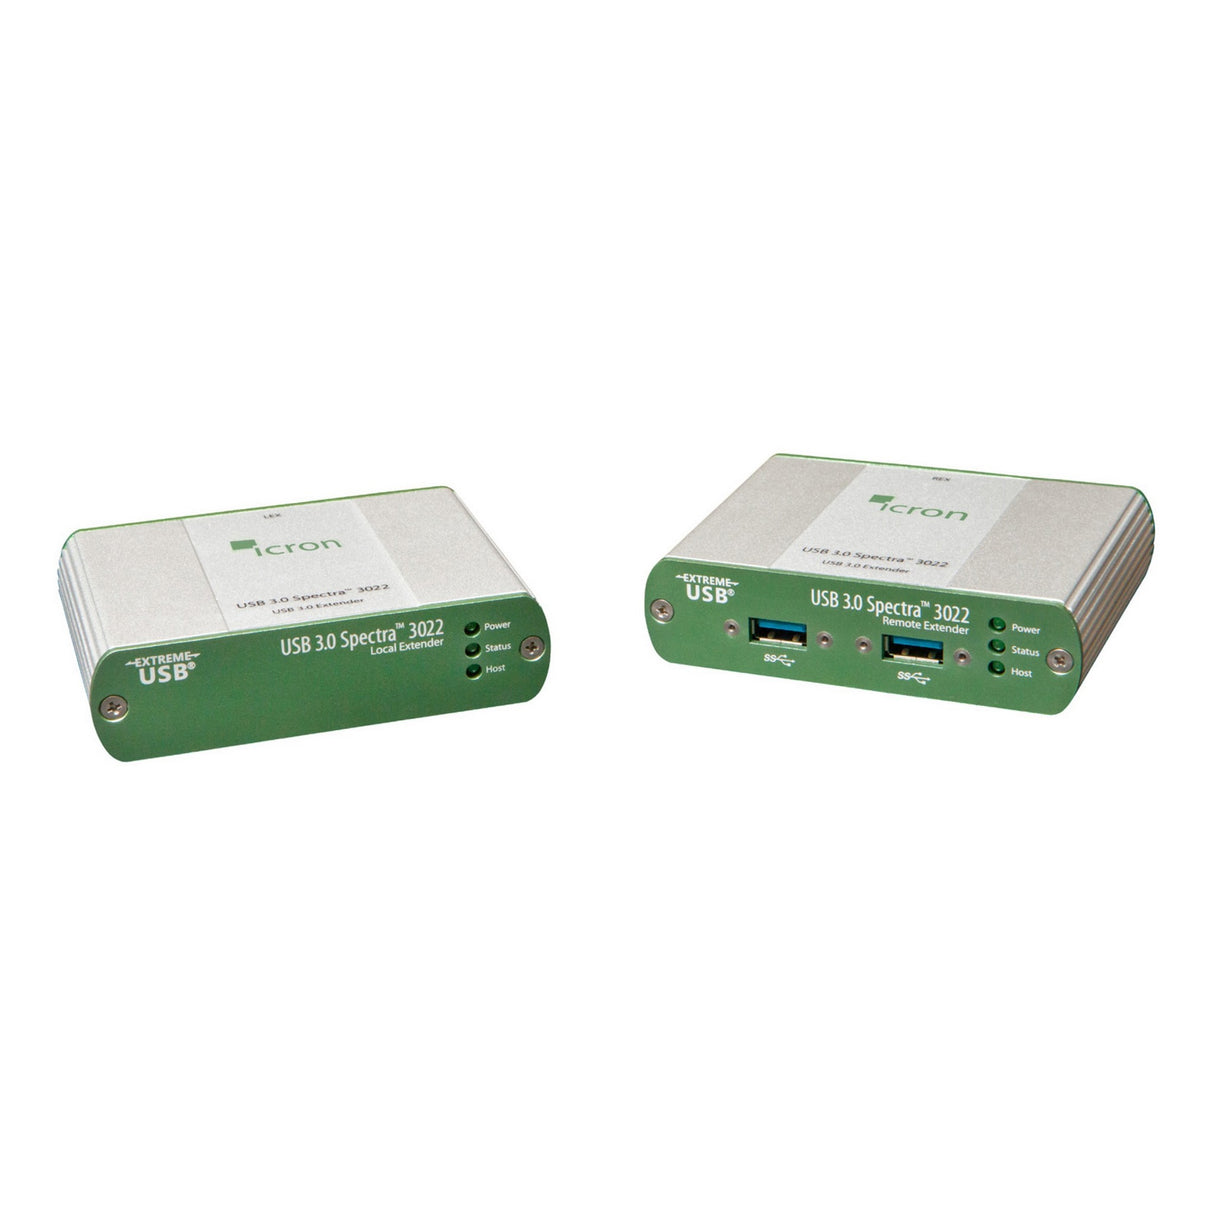 Icron Spectra 3022 USB 3.0 2-Port Multimode Fiber Extender